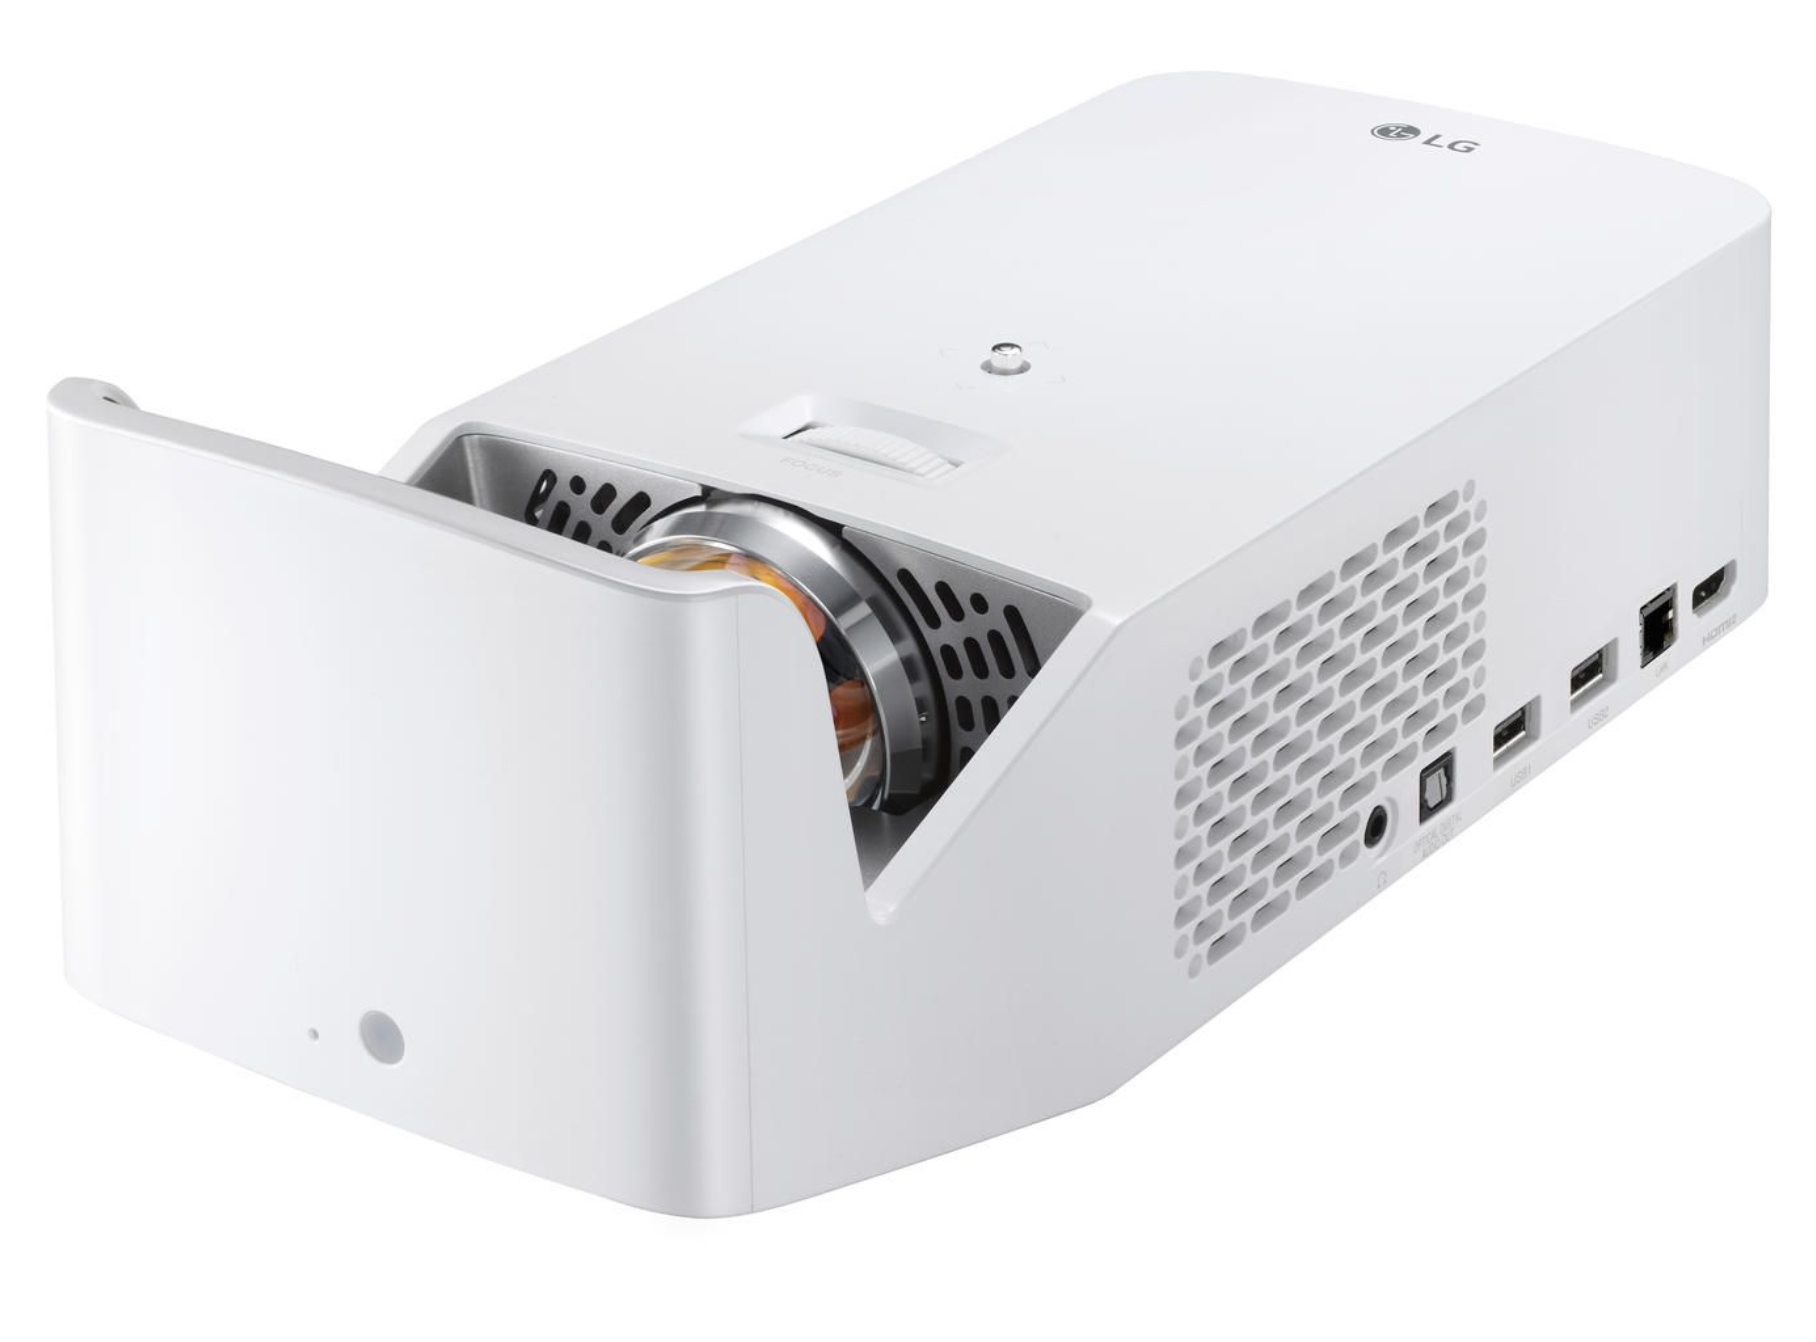 LG HF65LSR LED TV CineBeam mobiler Heimkino DLP-Projektor für nur 599,- Euro inkl. Versand